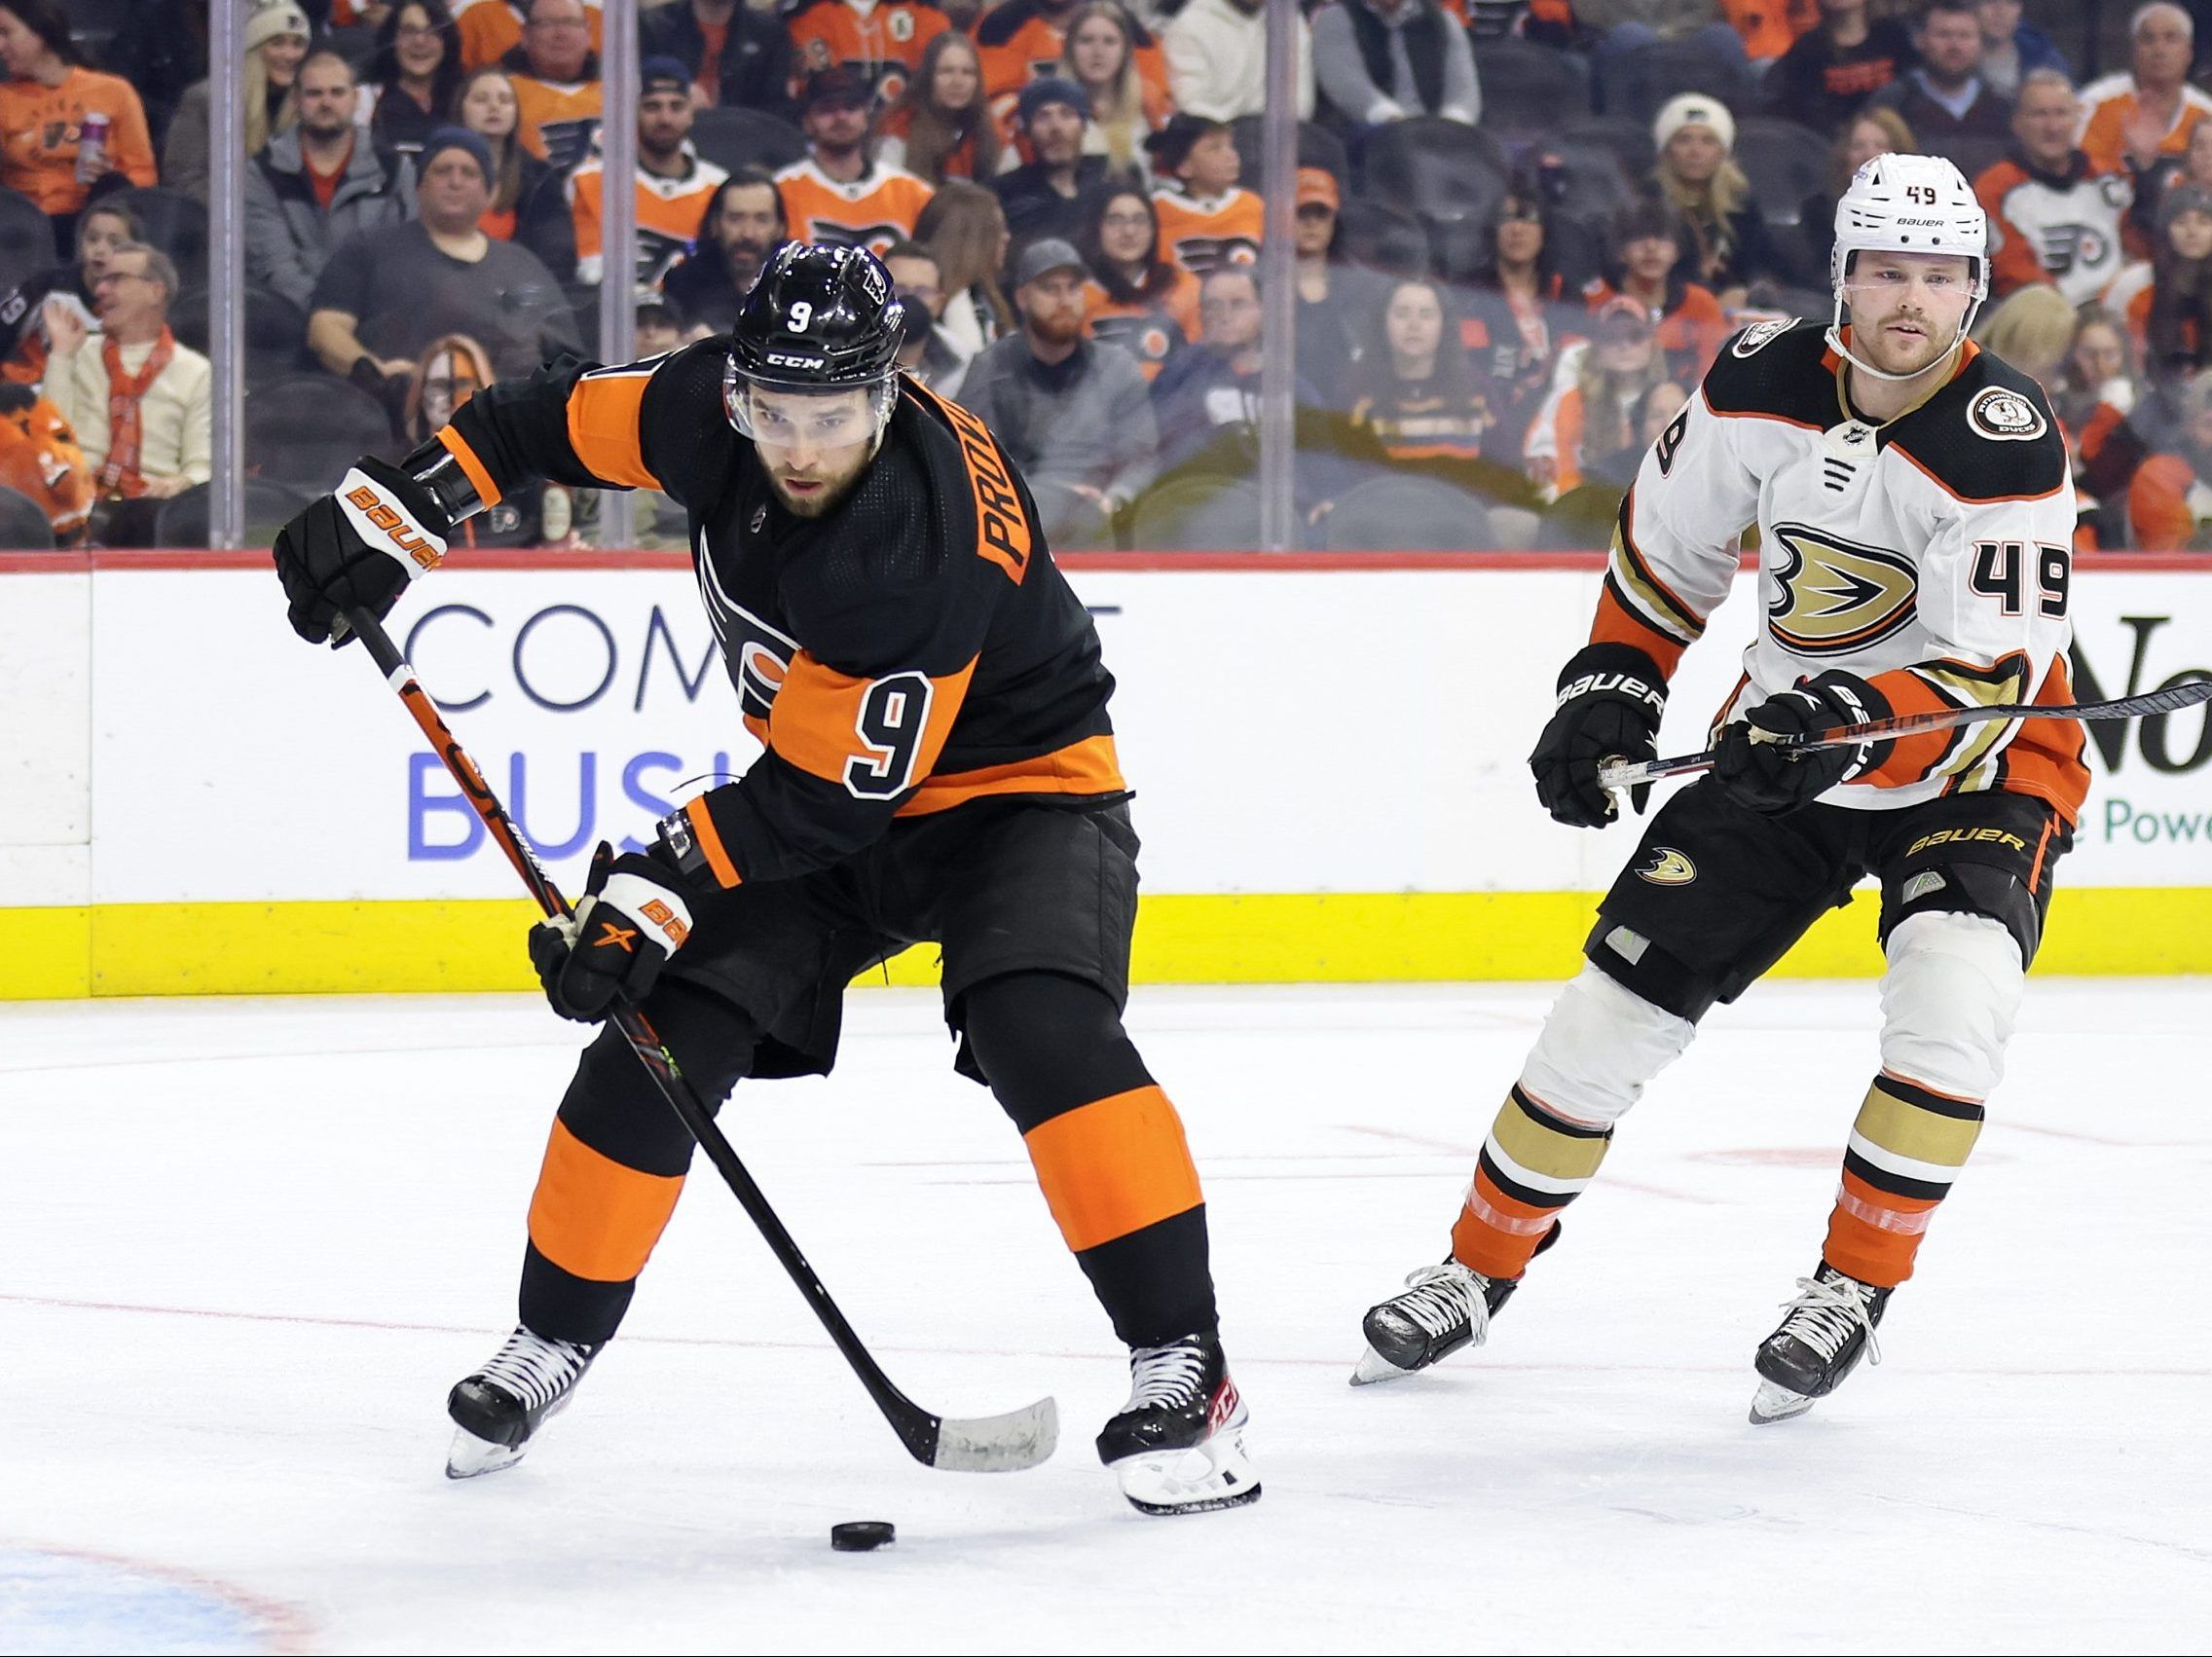 NHL: Provorov dealt in three-team trade involving Flyers, Blue